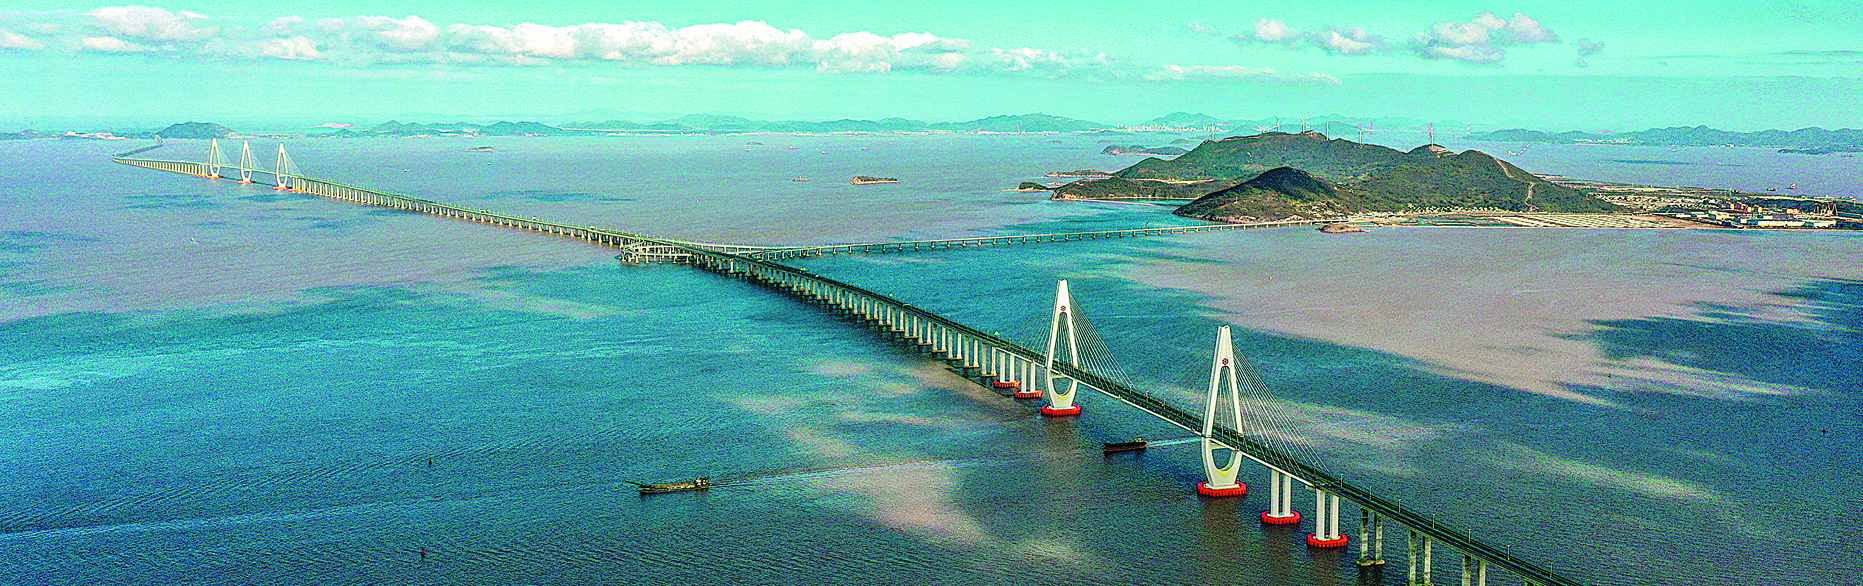 Inter-island expressway bridge opens for traffic